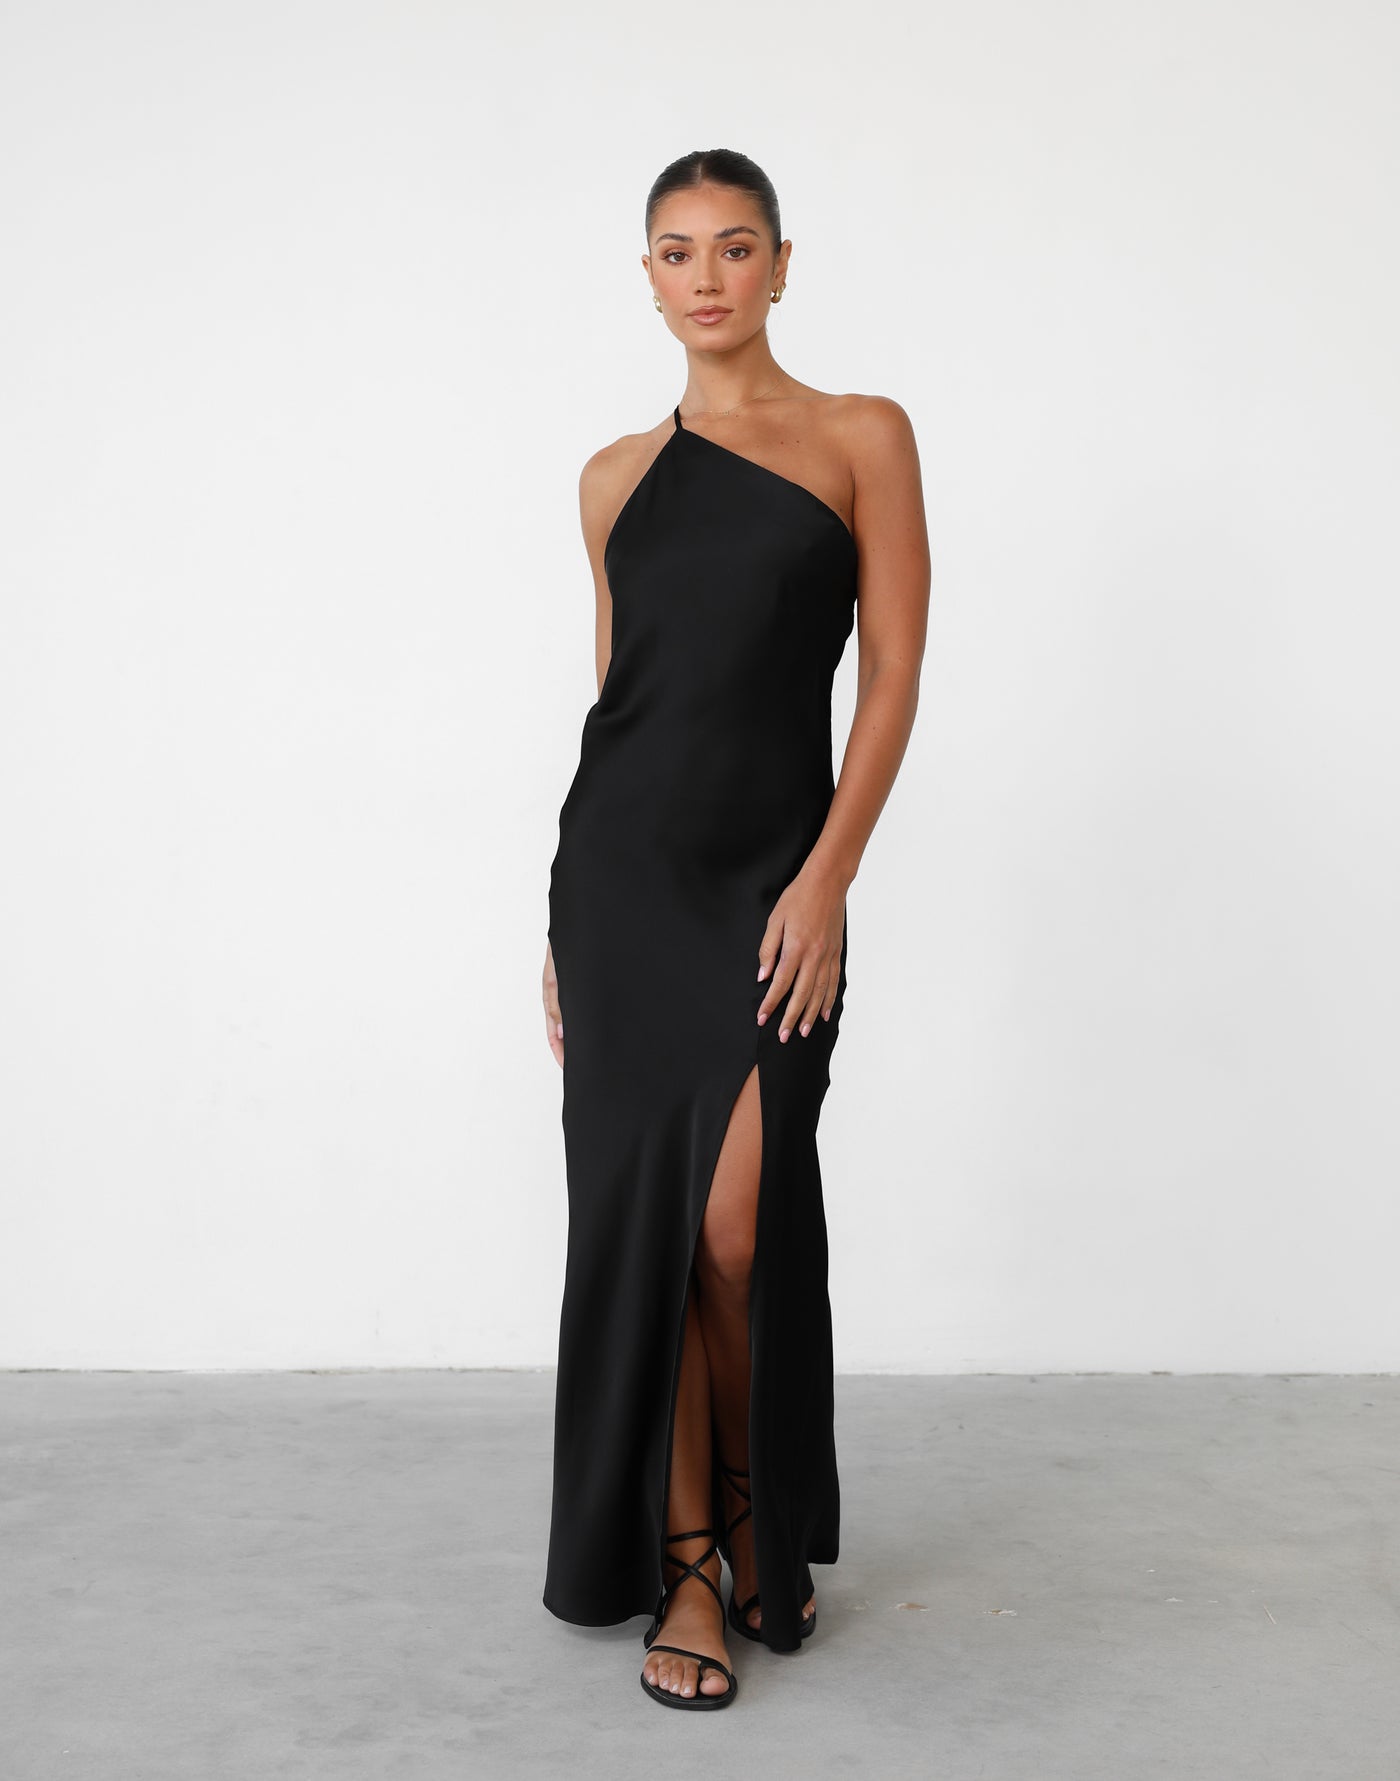 Alexandra Maxi Dress (Black) - Black One Shoulder Maxi Dress - Women's Dress - Charcoal Clothing